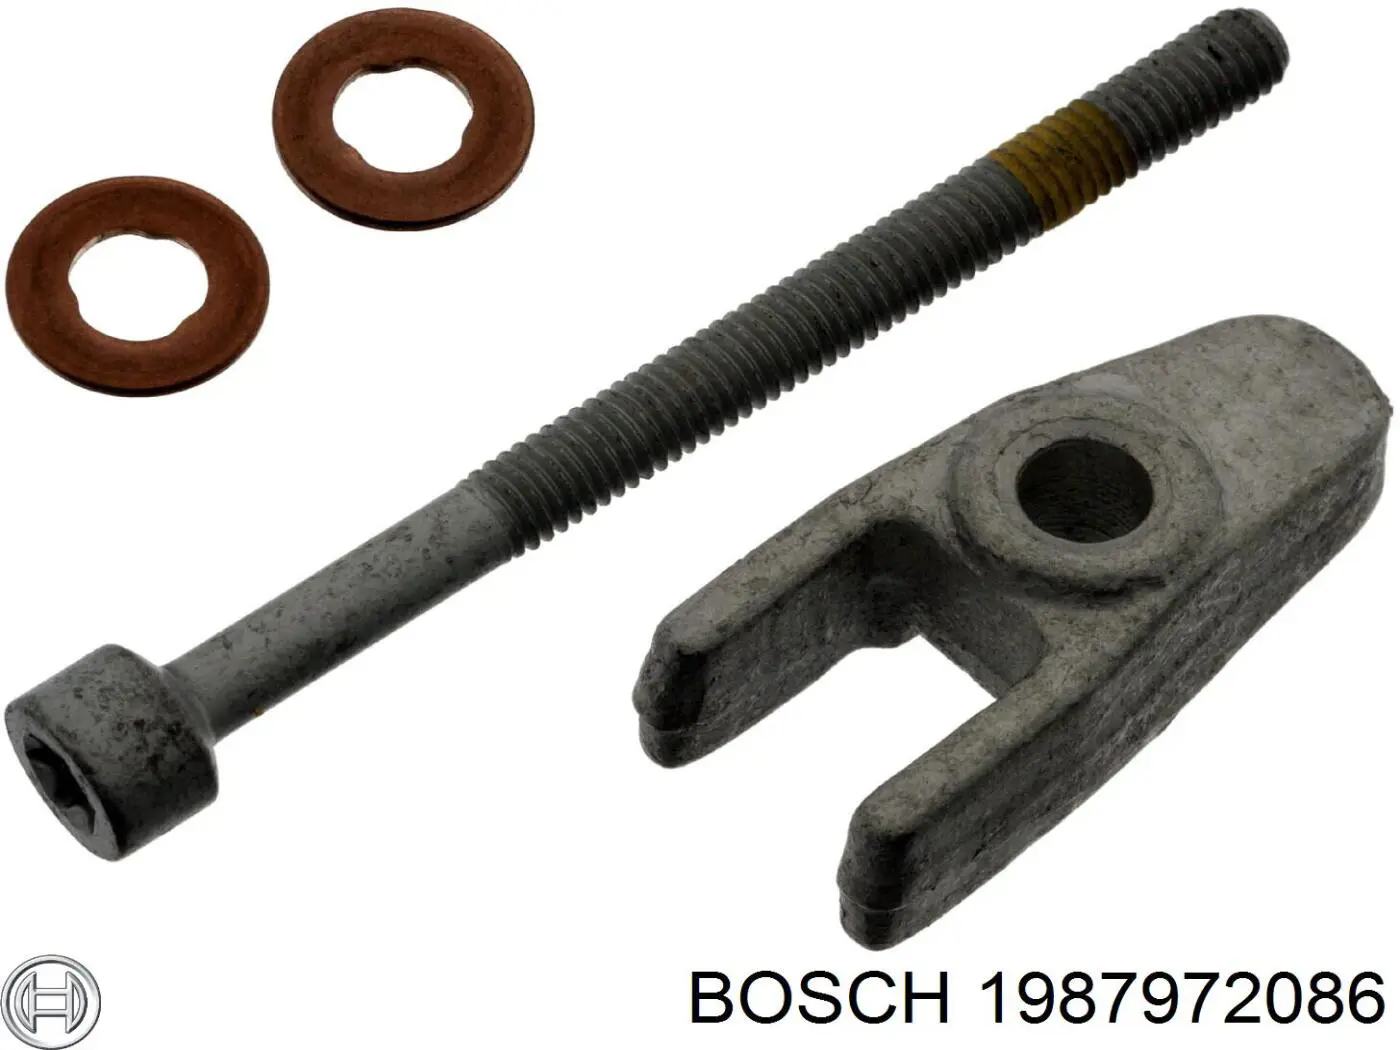 1987972086 Bosch junta de inyectores